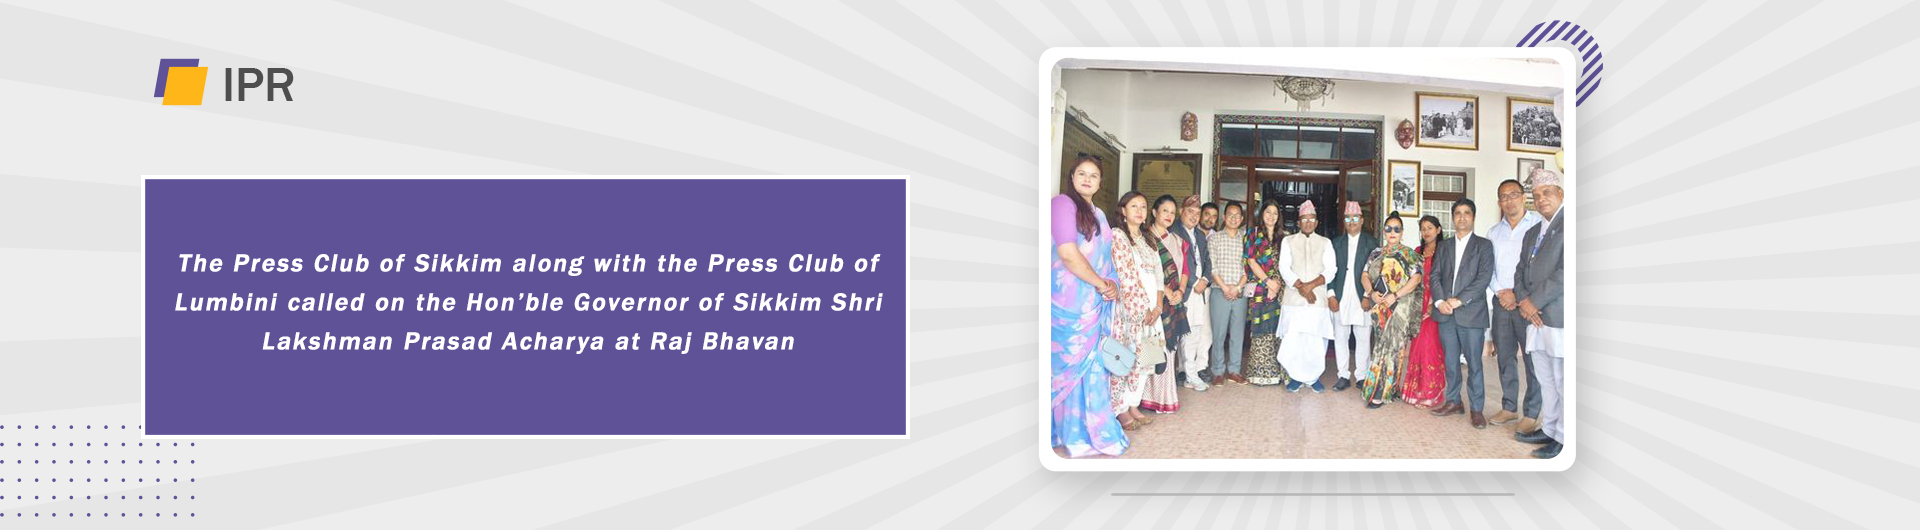 The Press Club of Sikkim along with the Press Club of Lumbini called on the Hon’ble Governor of Sikkim Shri Lakshman Prasad Acharya at Raj Bhavan